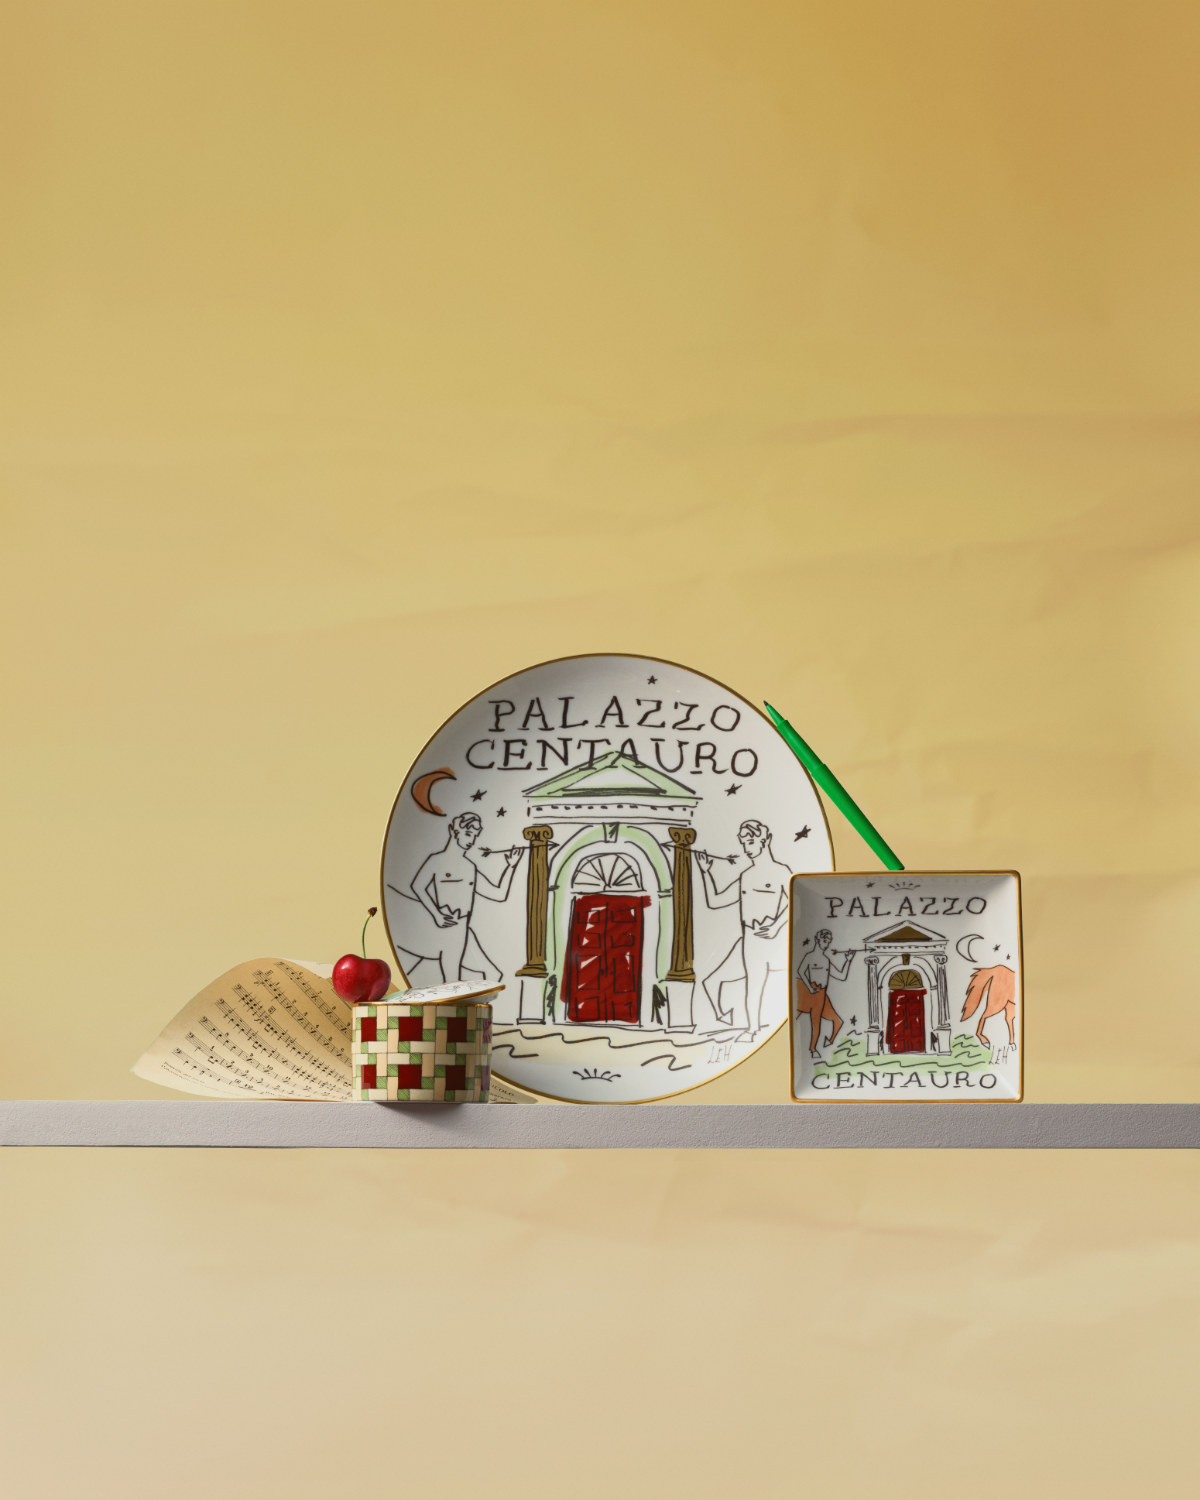 Profumi Luchino: The New Ginori 1735 Home Fragrance Collection